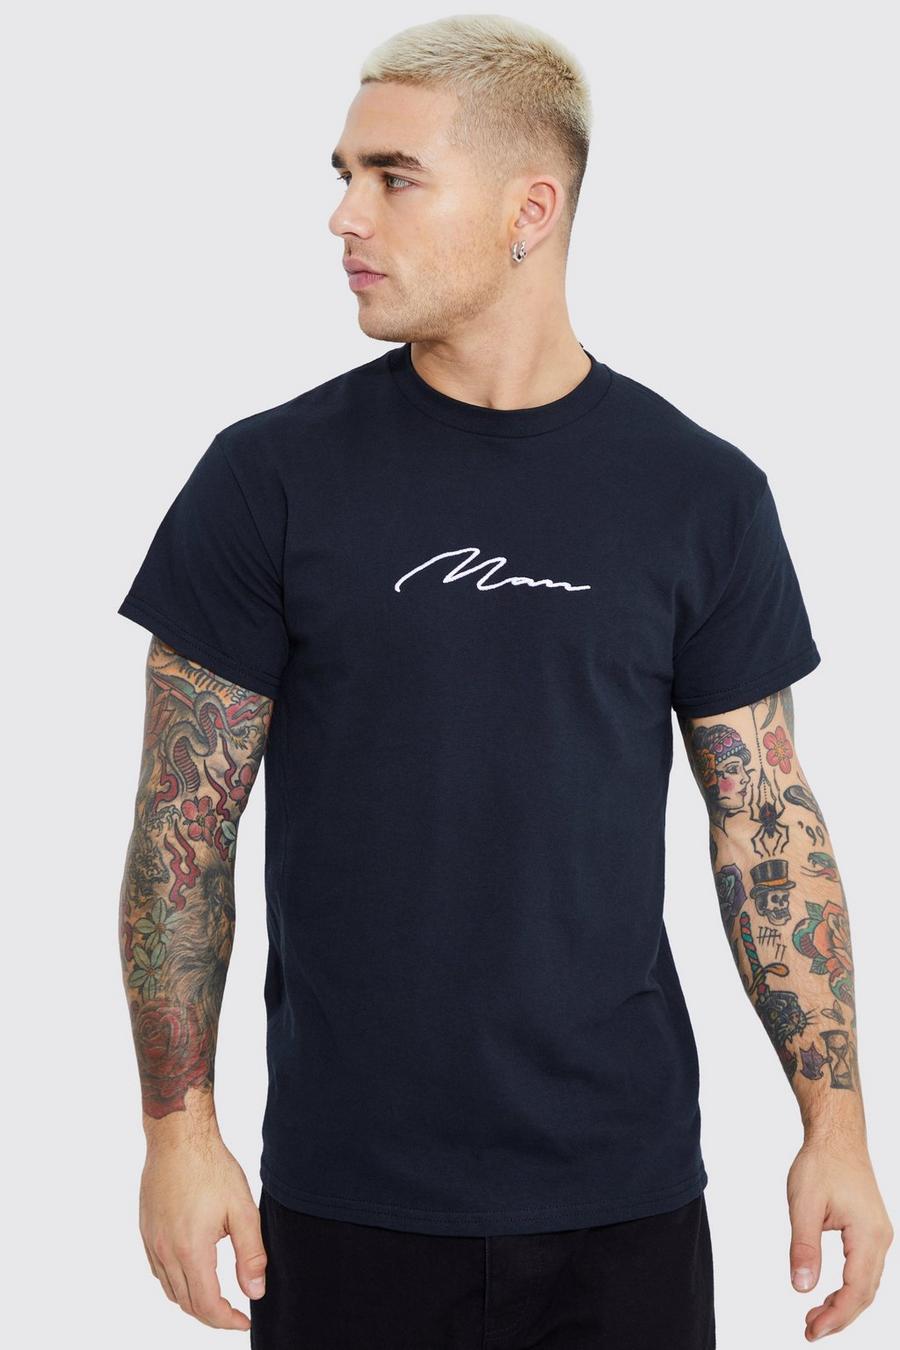 T-shirt con firma Man e ricami, Black negro